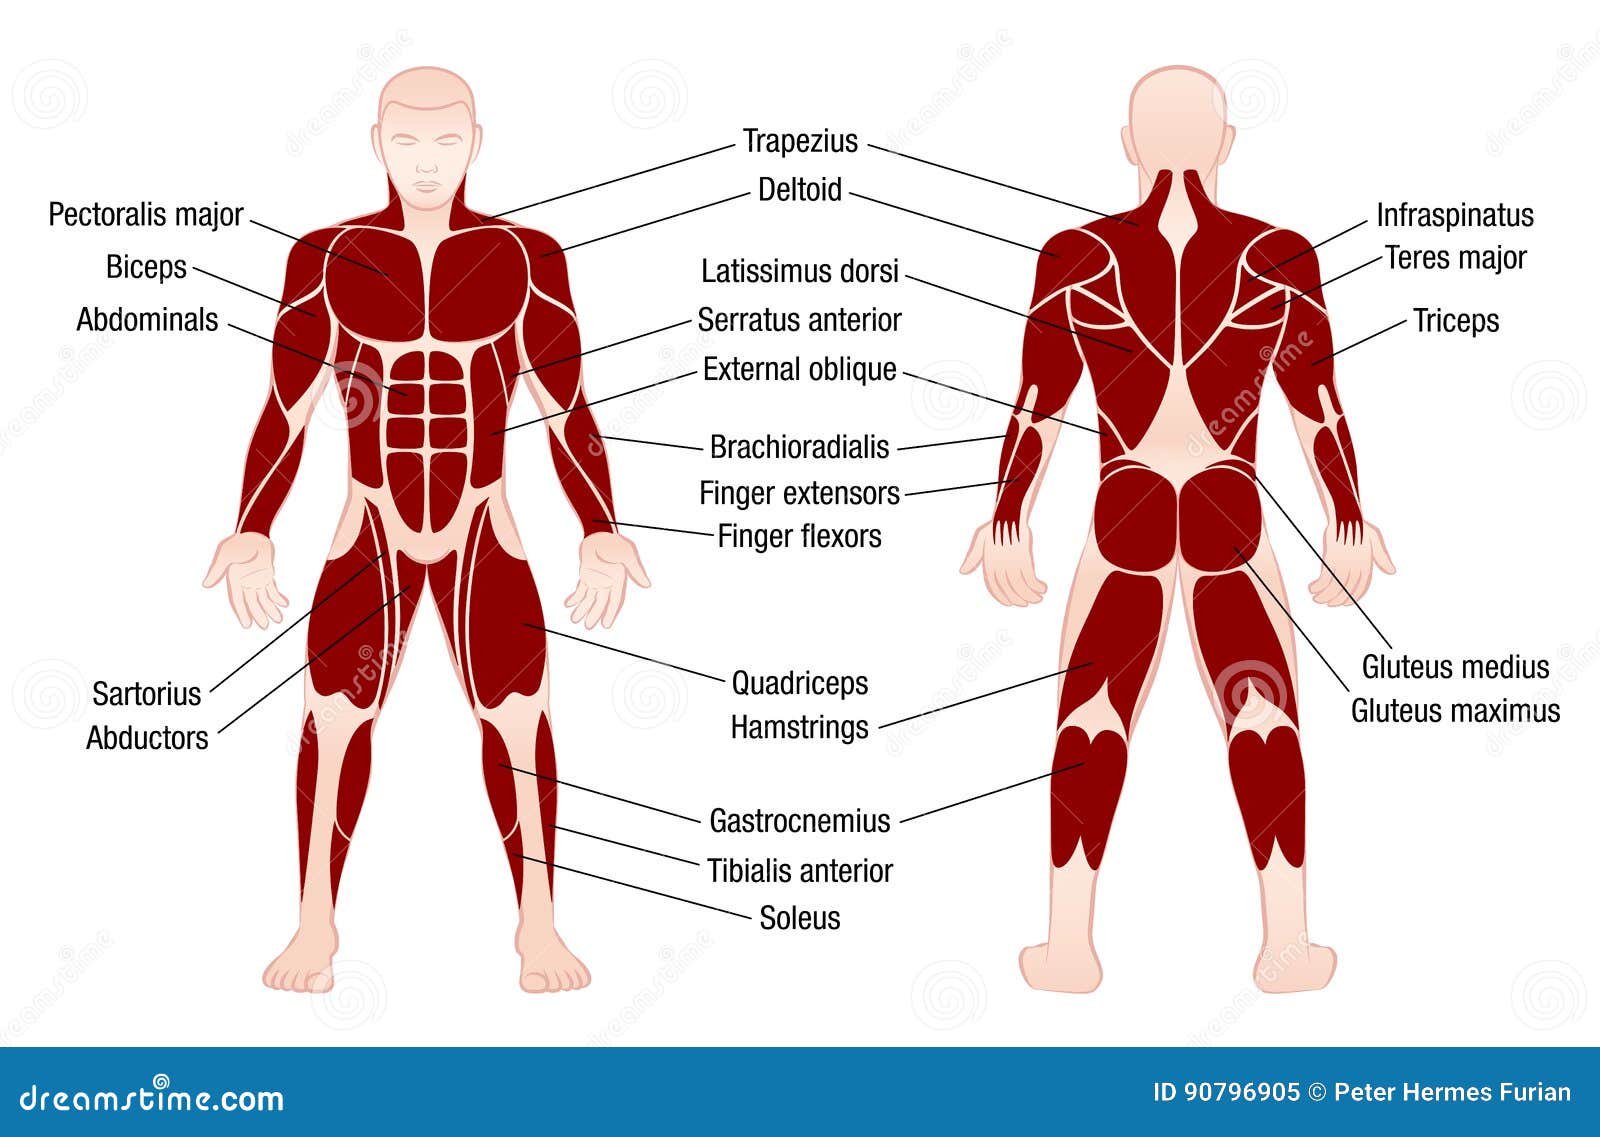 Muscles Chart Description Muscular Body Man Stock Vector - Illustration of deltoids, health ...